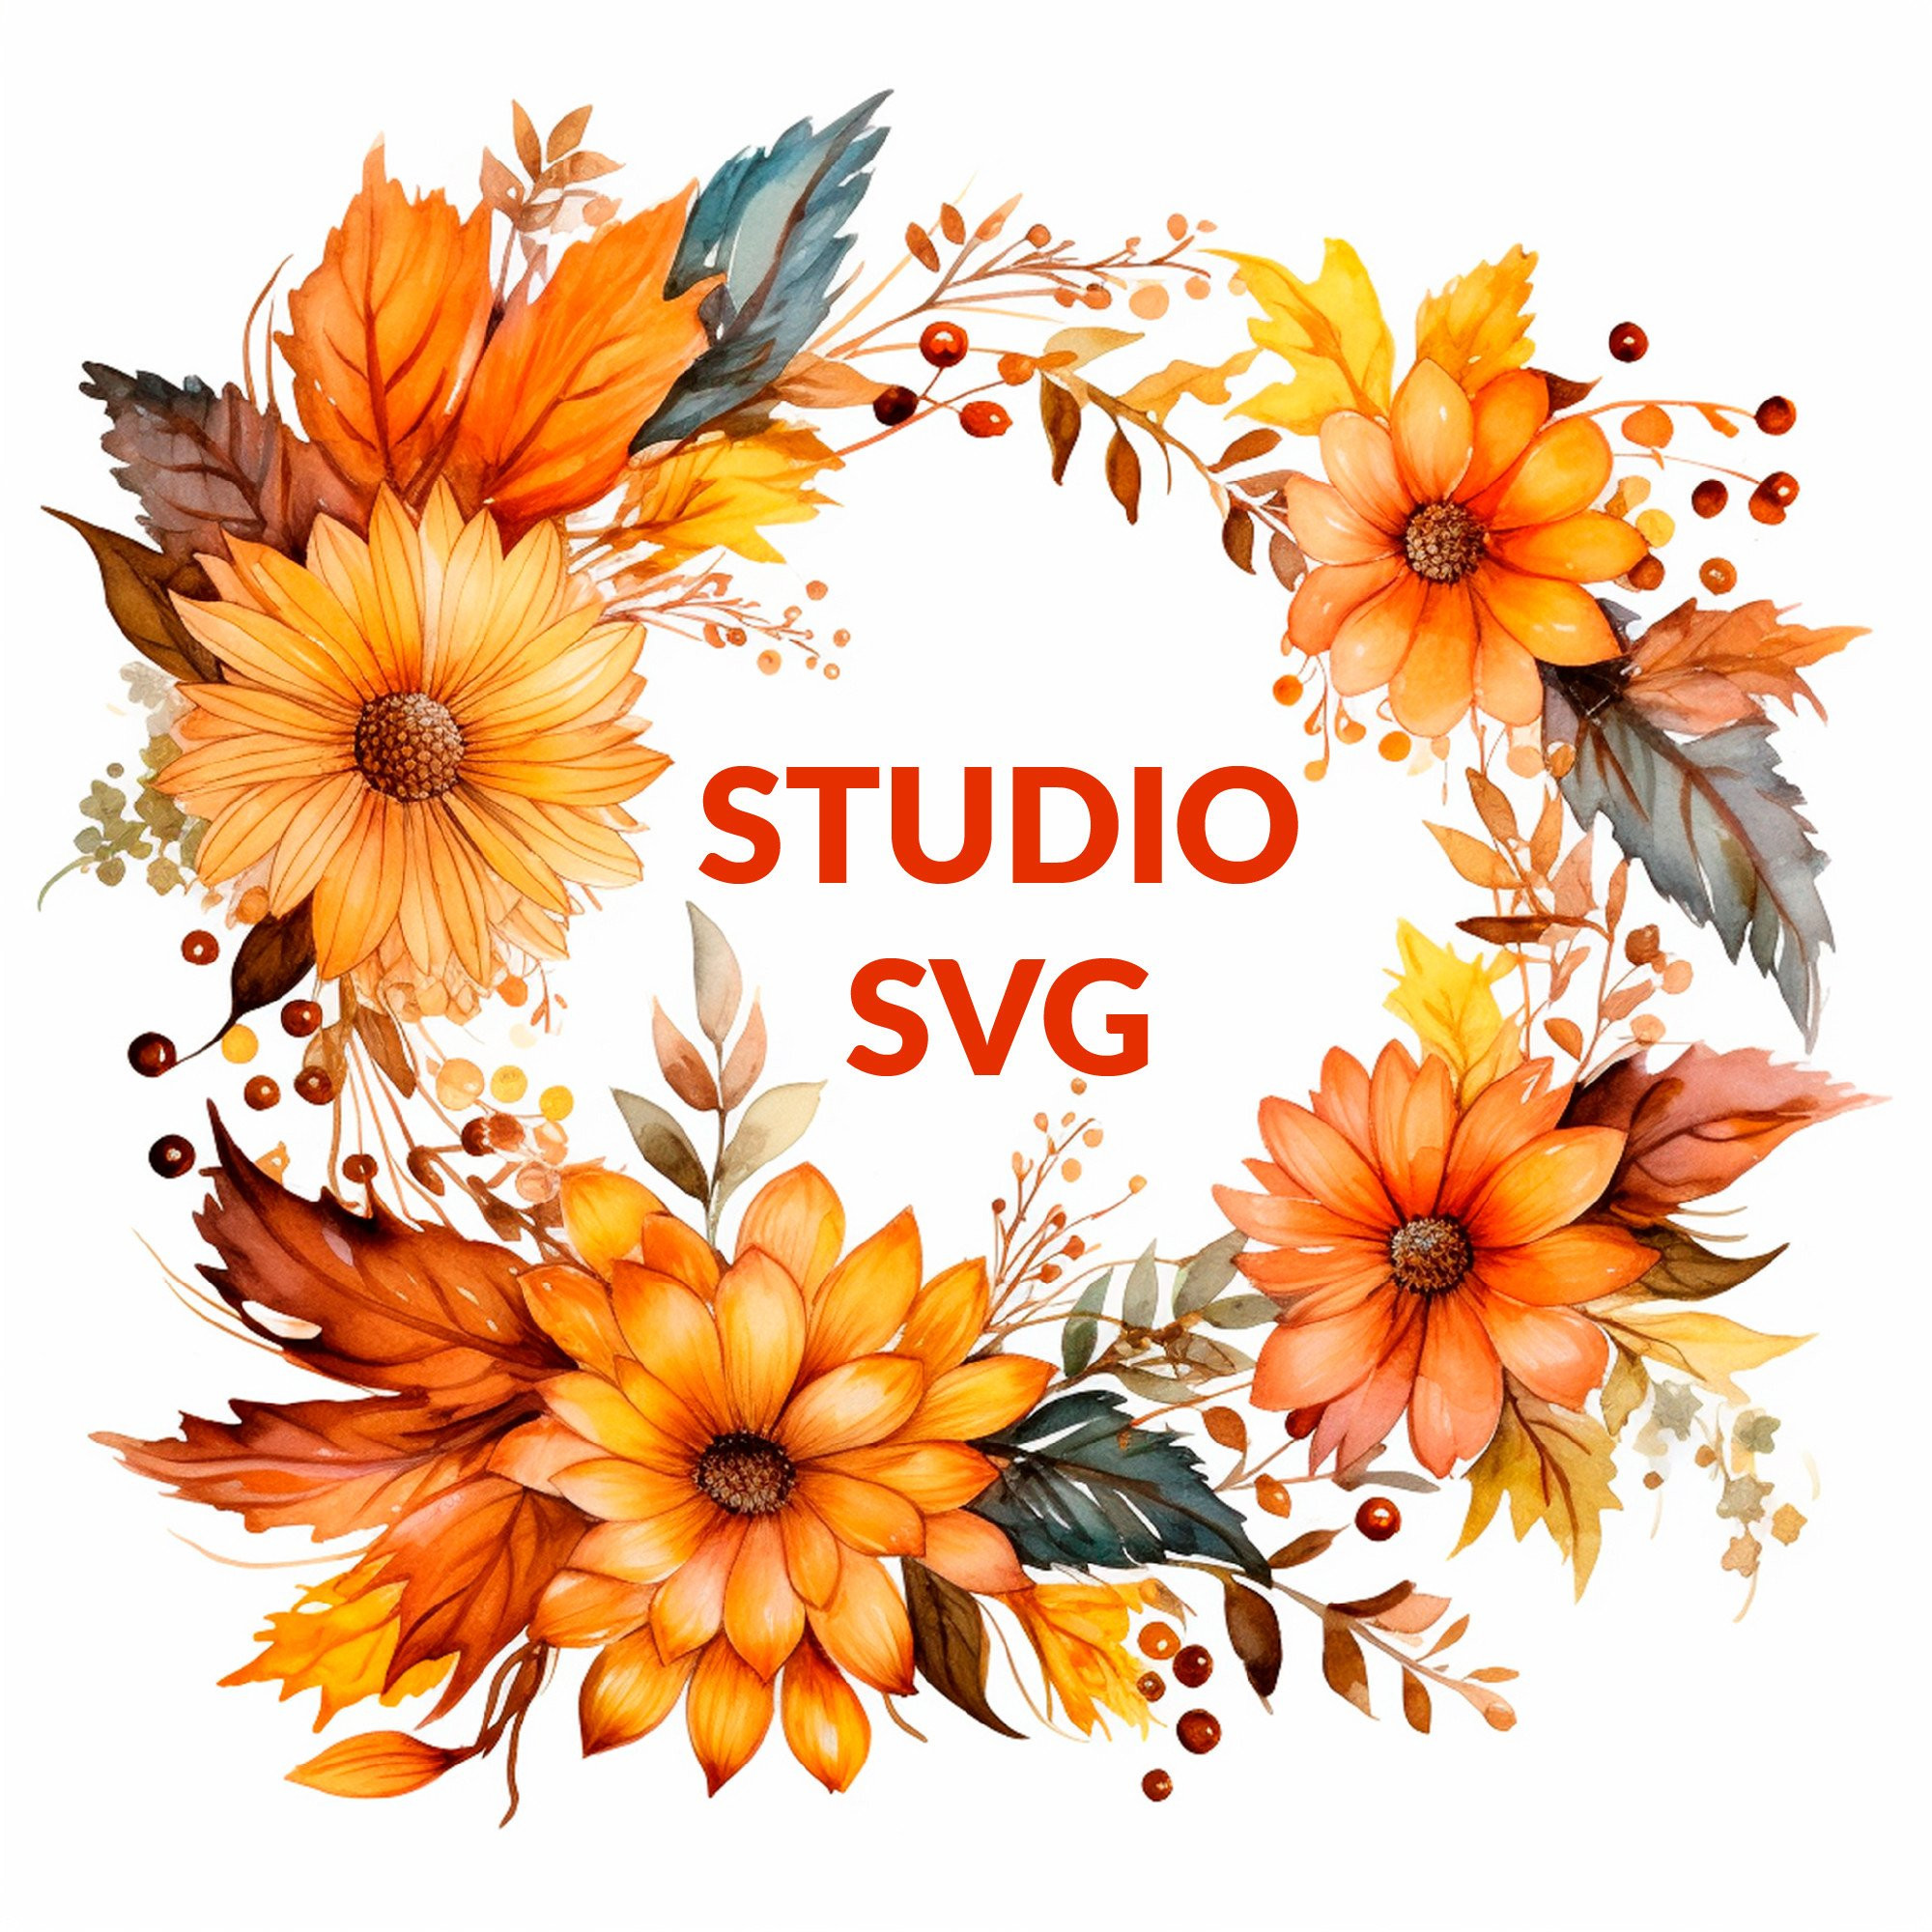 StudioSVG's profile picture